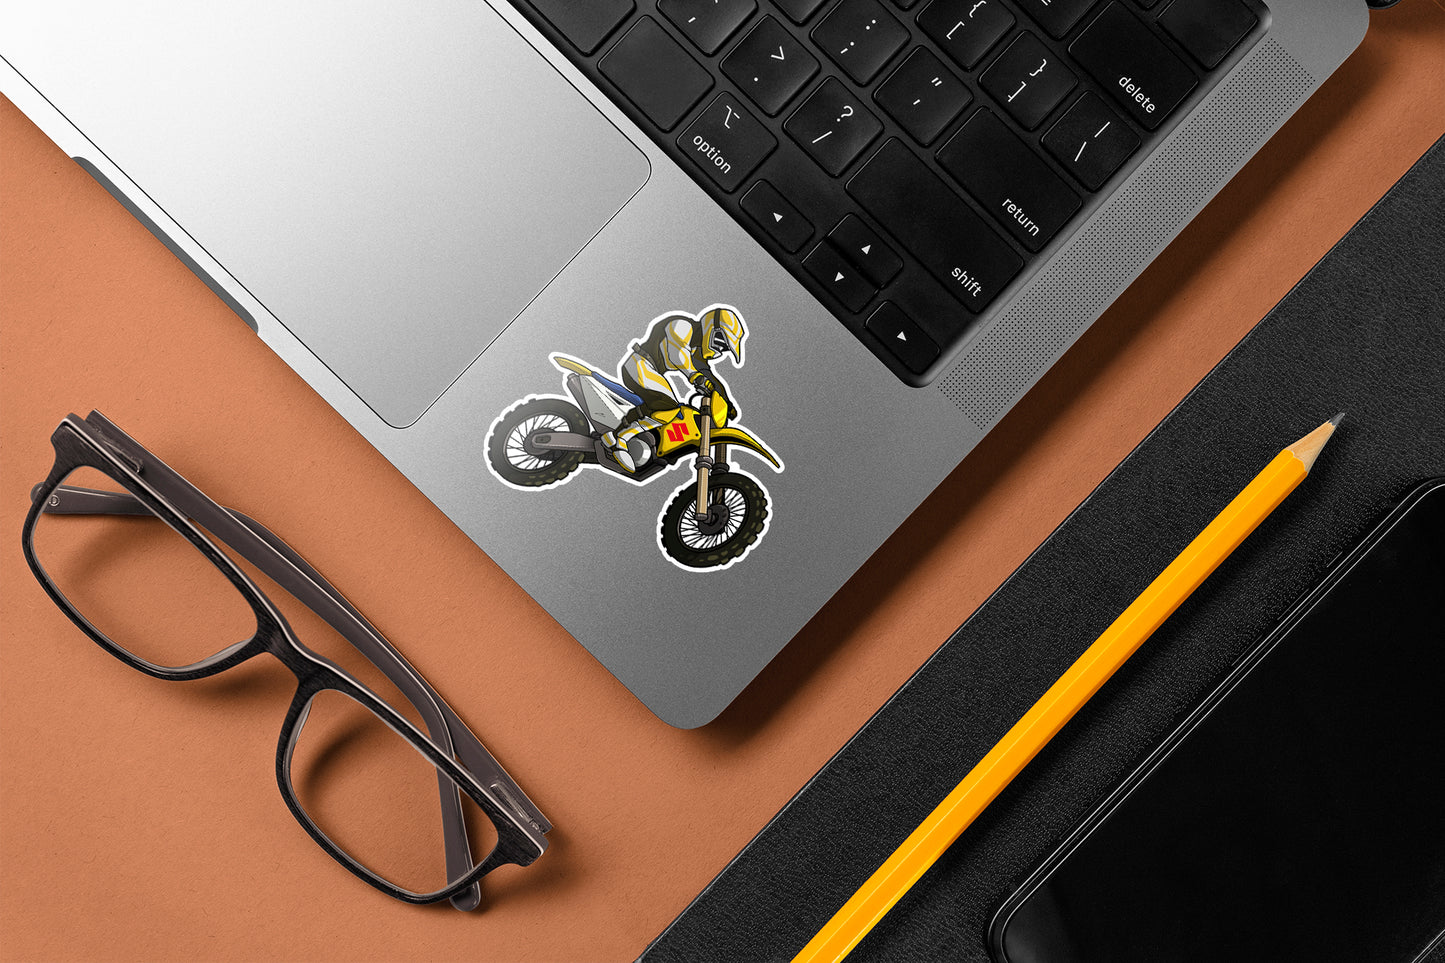 Yellow Motocross Bike Sticker